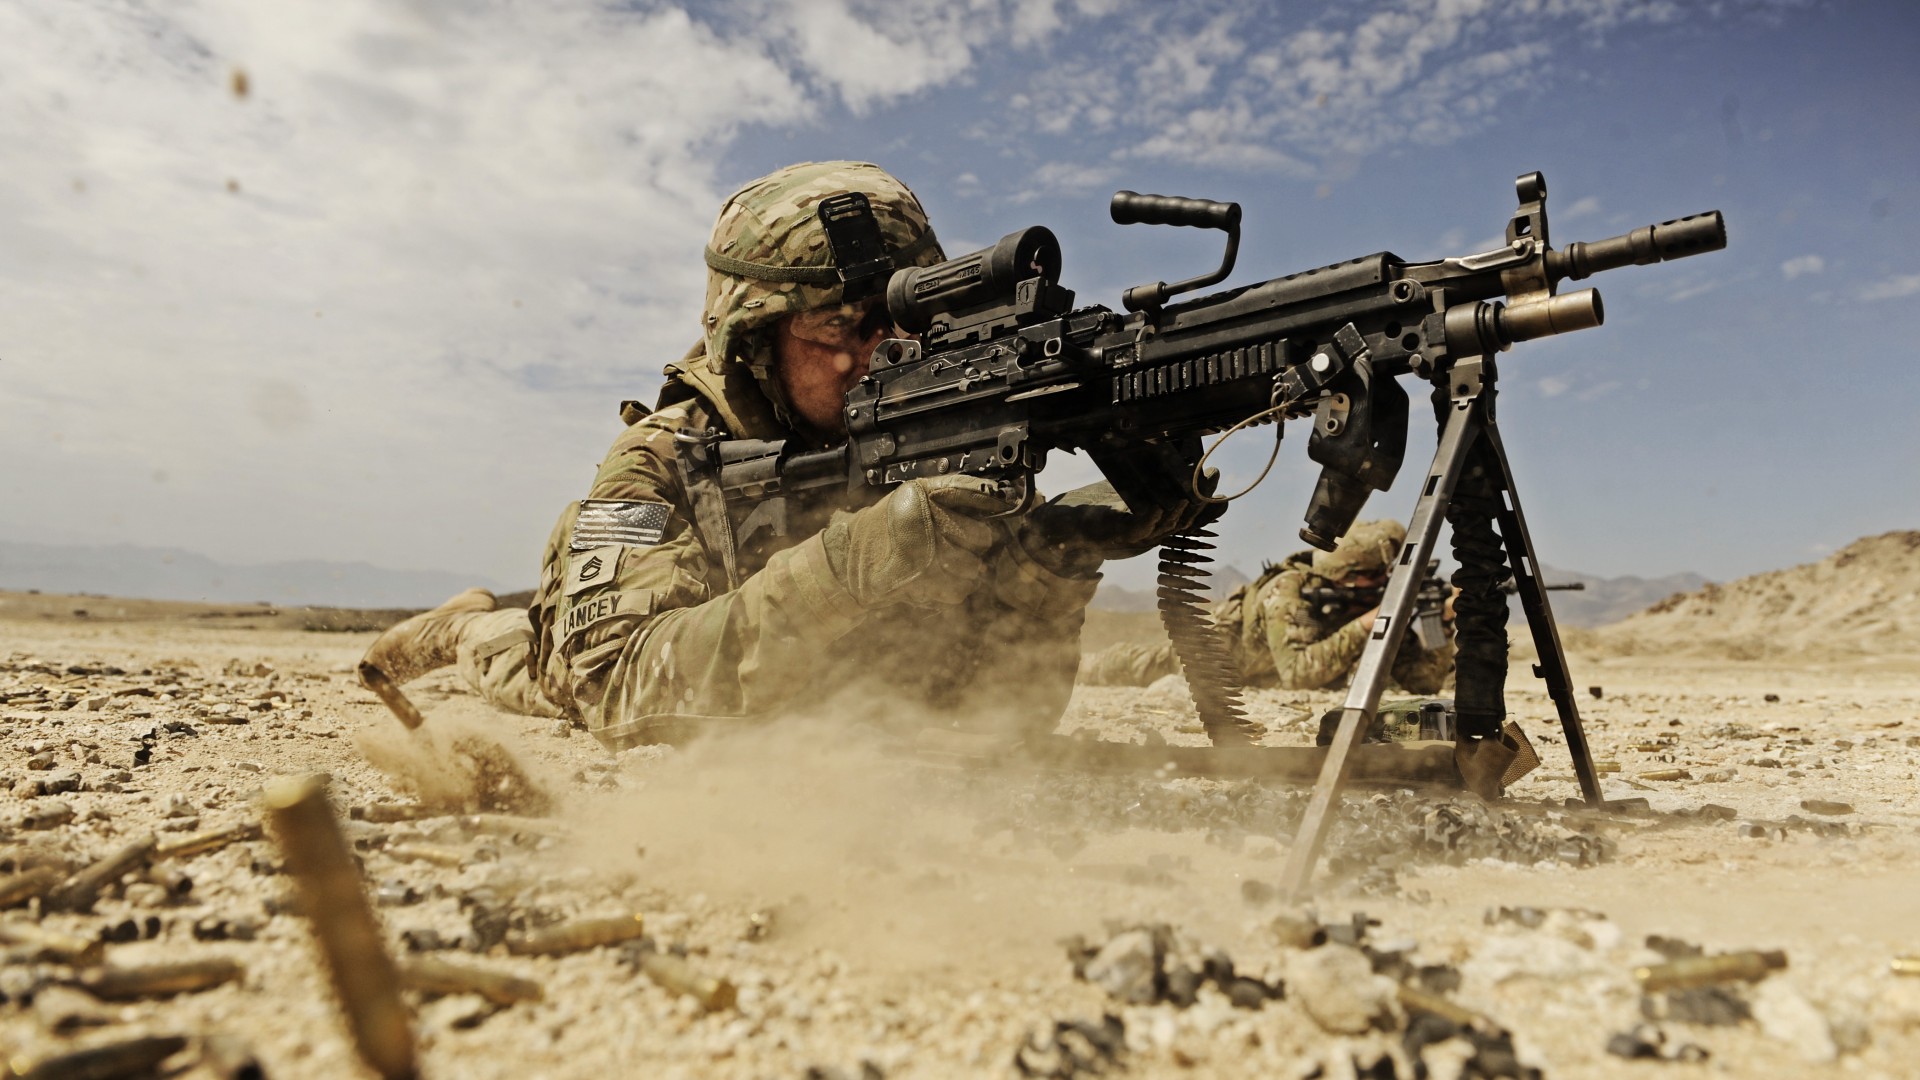 солдат, ручной пулемёт, Армия США, стрельба, soldier, M249 LMG machine gun U.S. Army, firing, dust, sand (horizontal)